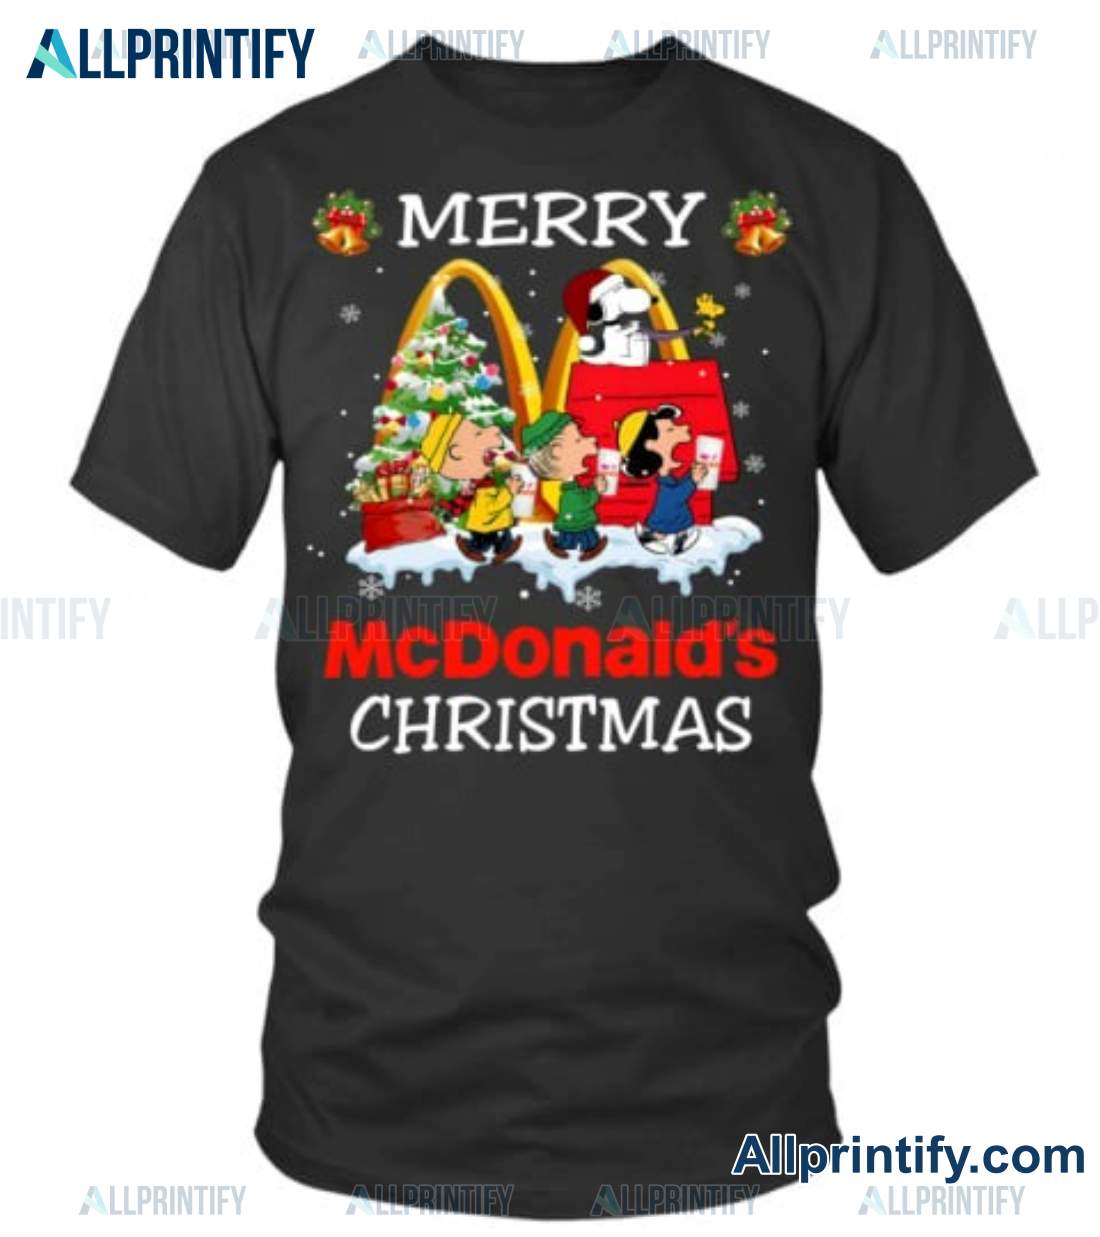 The Peanuts Merry Mcdonald's Christmas Shirt